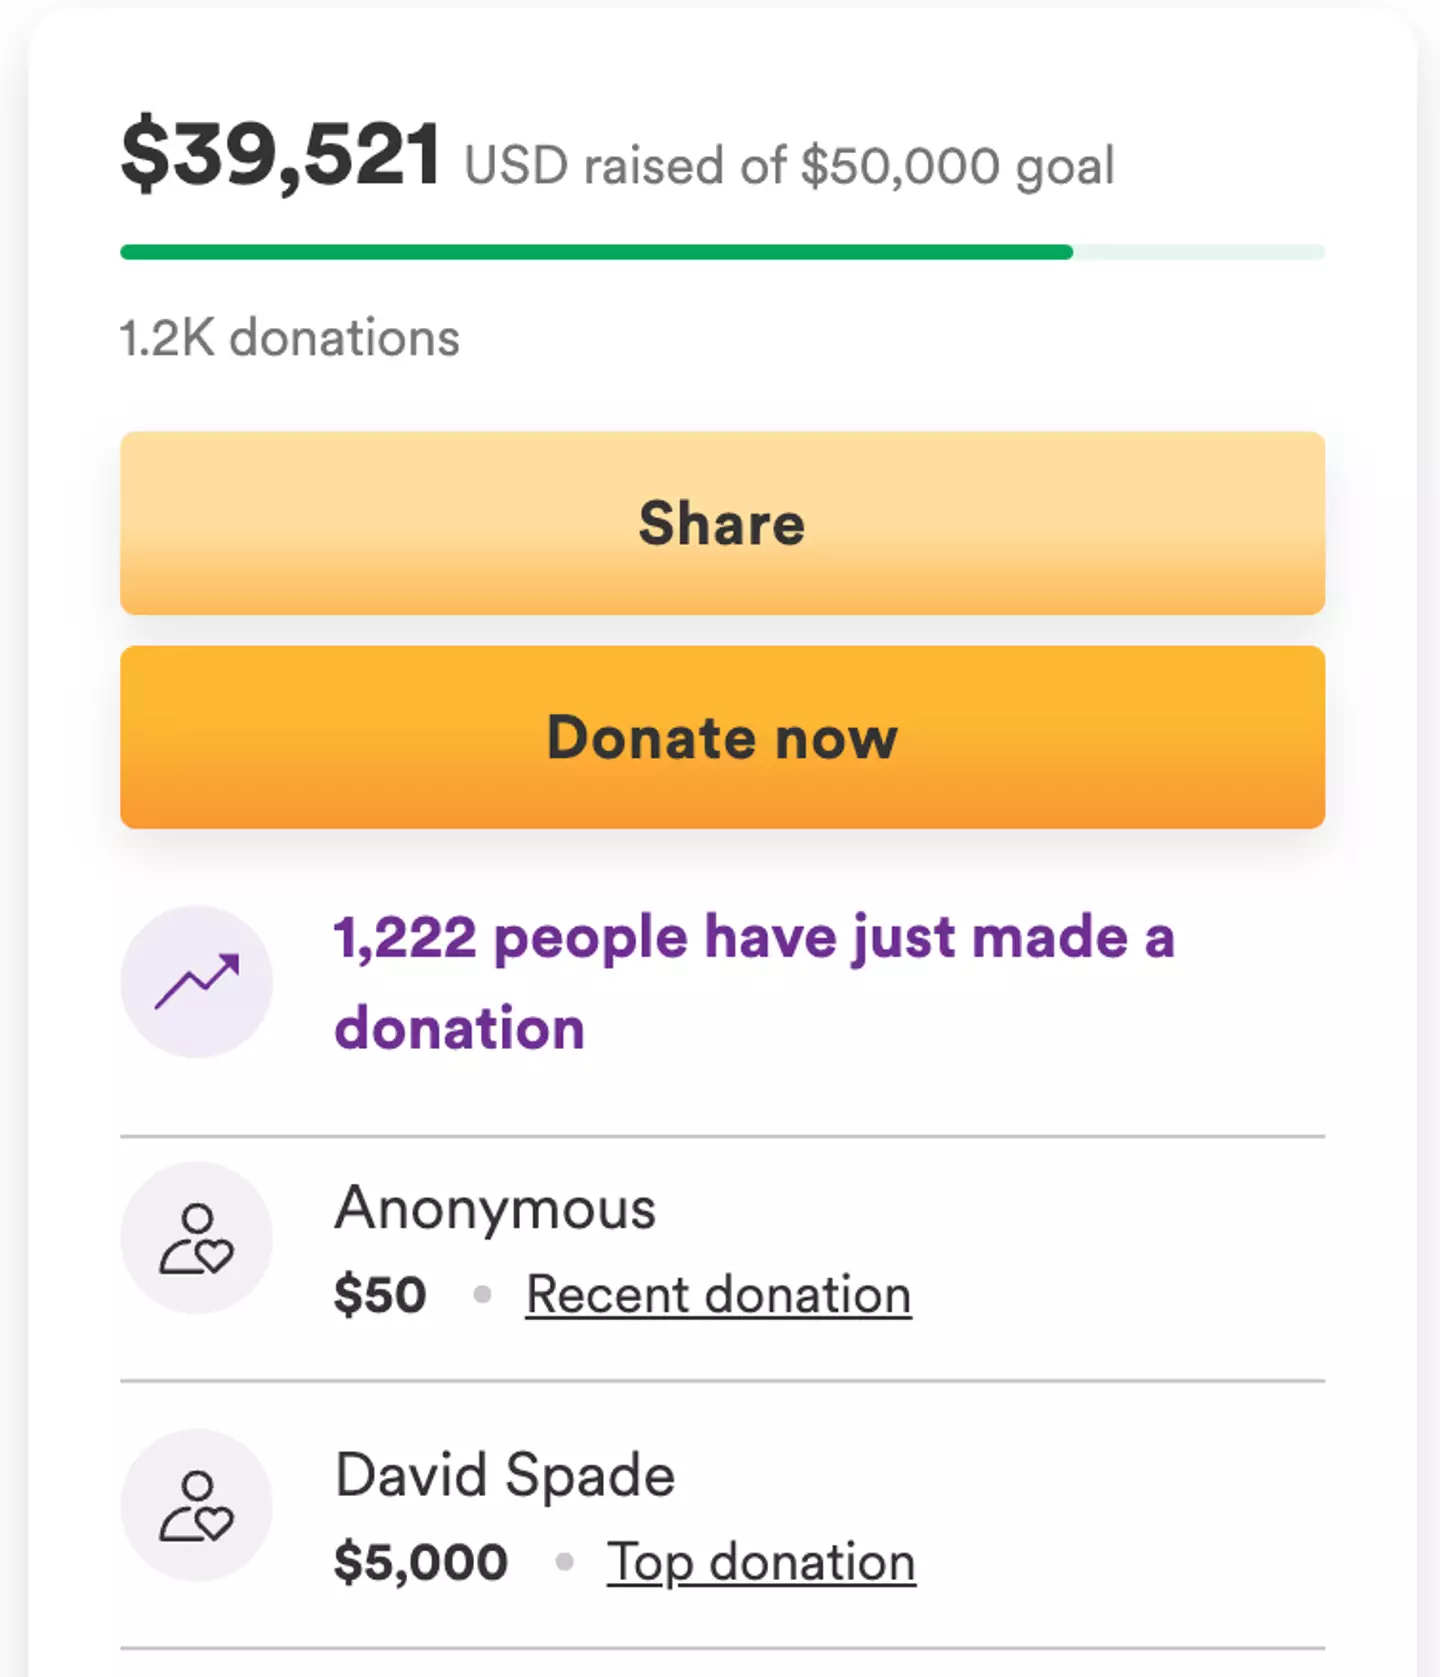 David Spade made a very generous donation